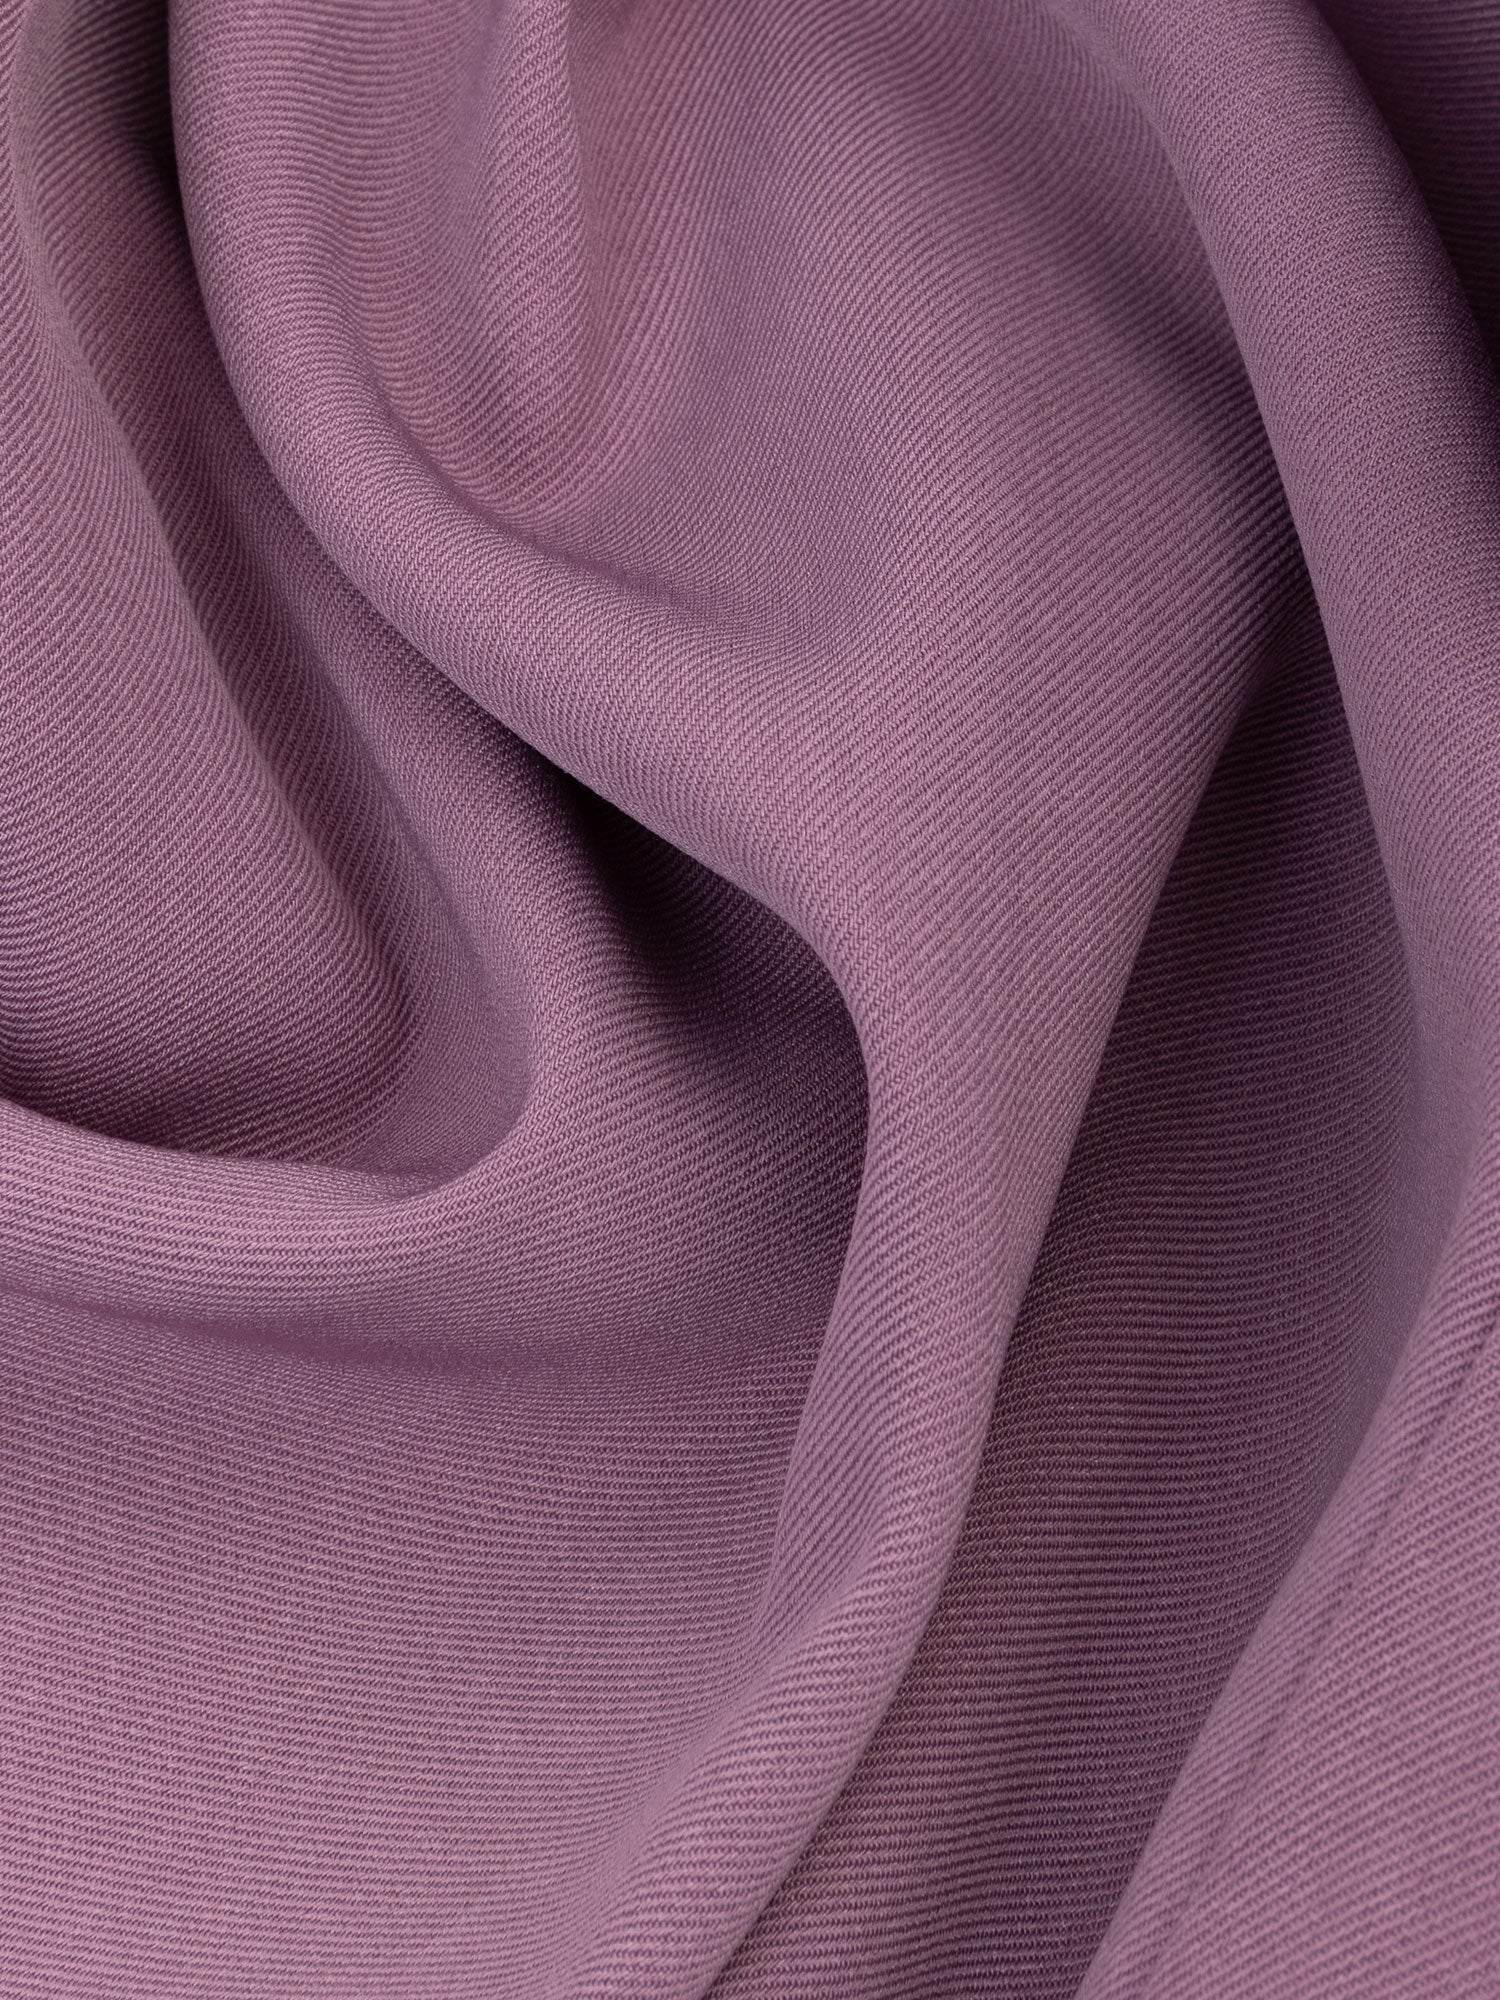 Ydence pantalon Solange soft purple